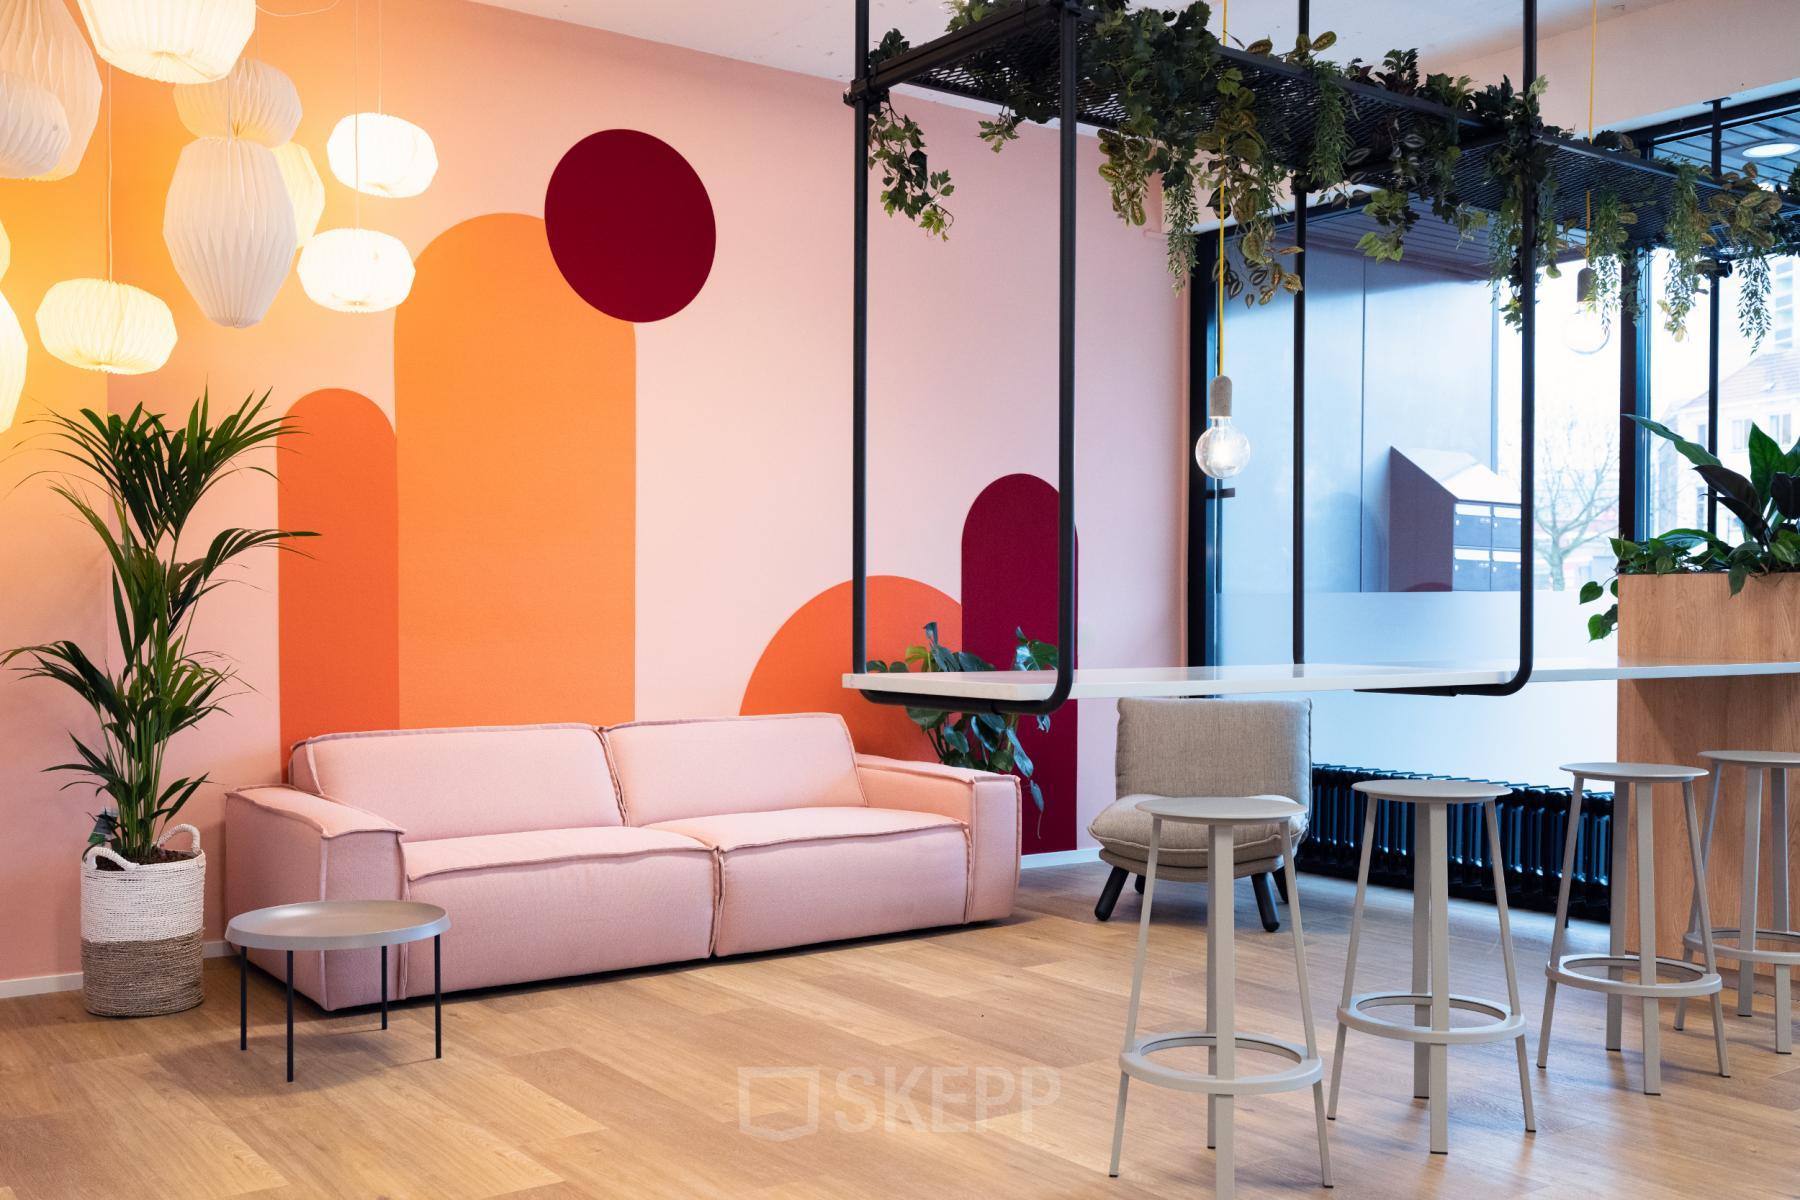 Modern office space rental at Jansbuitensingel 30 in Arnhem Centrum with comfortable furnishings and vibrant decor.